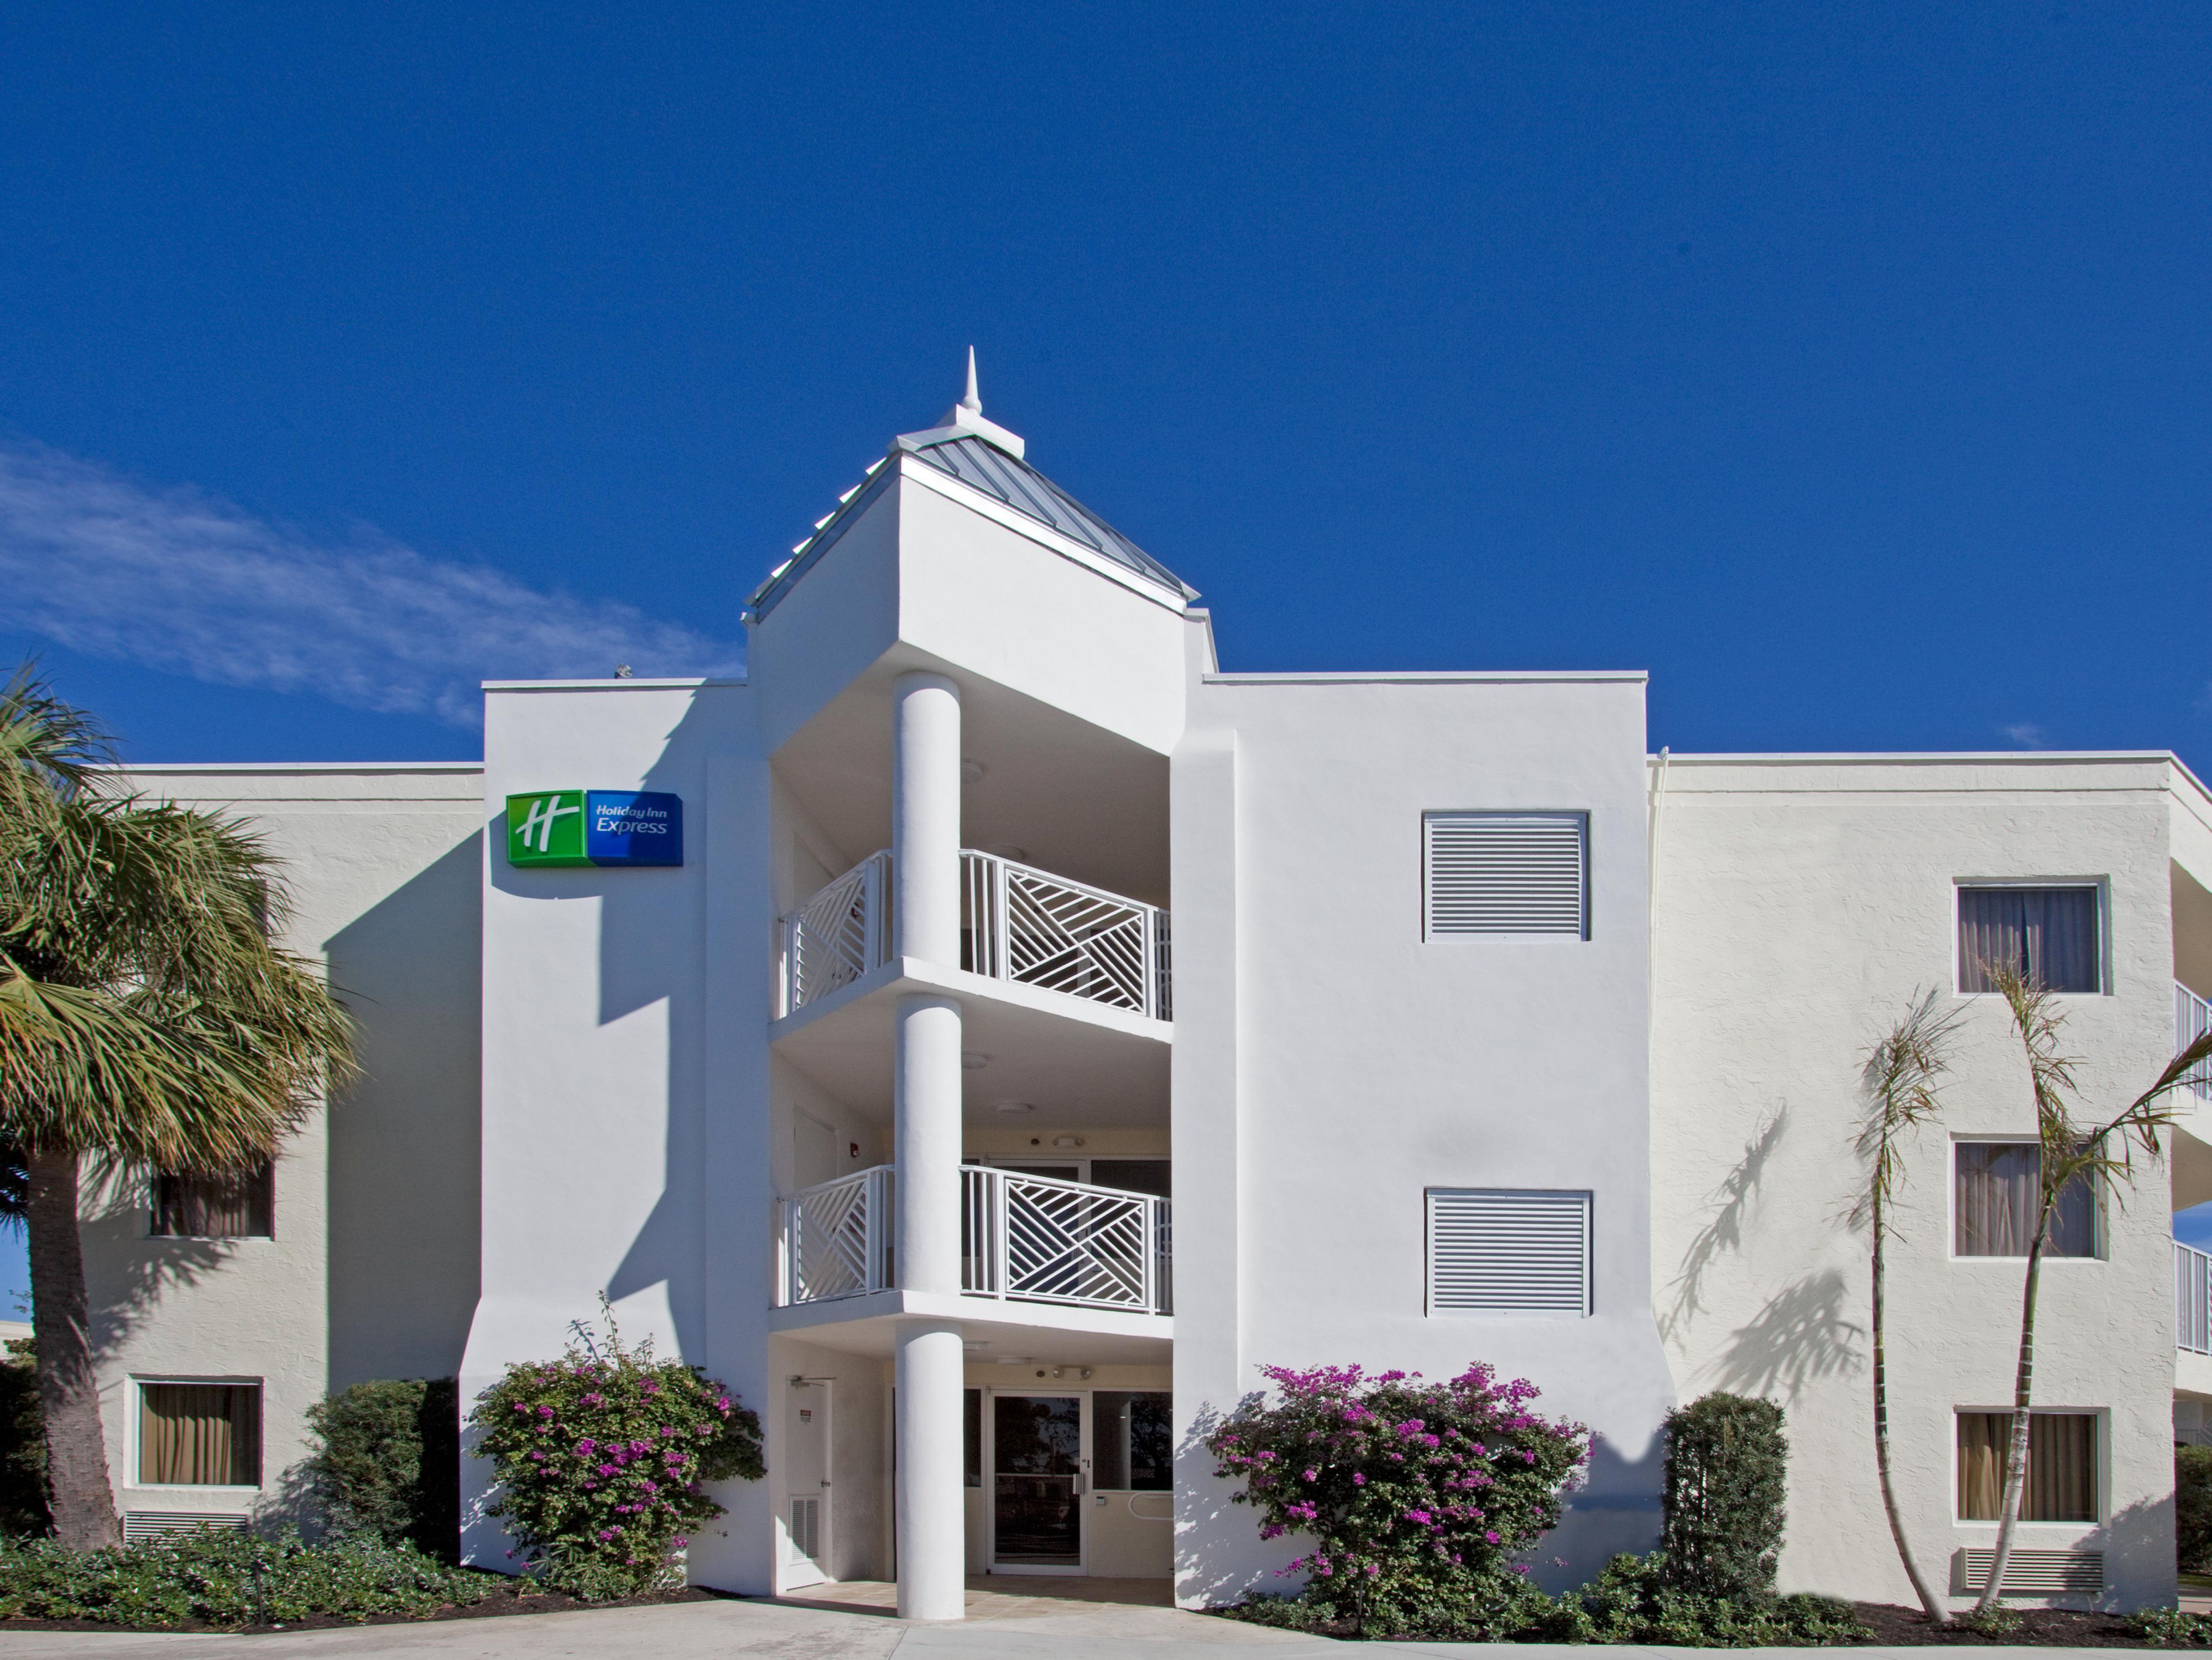 Inn of America - Palm Beach Gardens  Best Hotel in Palm Beach Gardens, FL